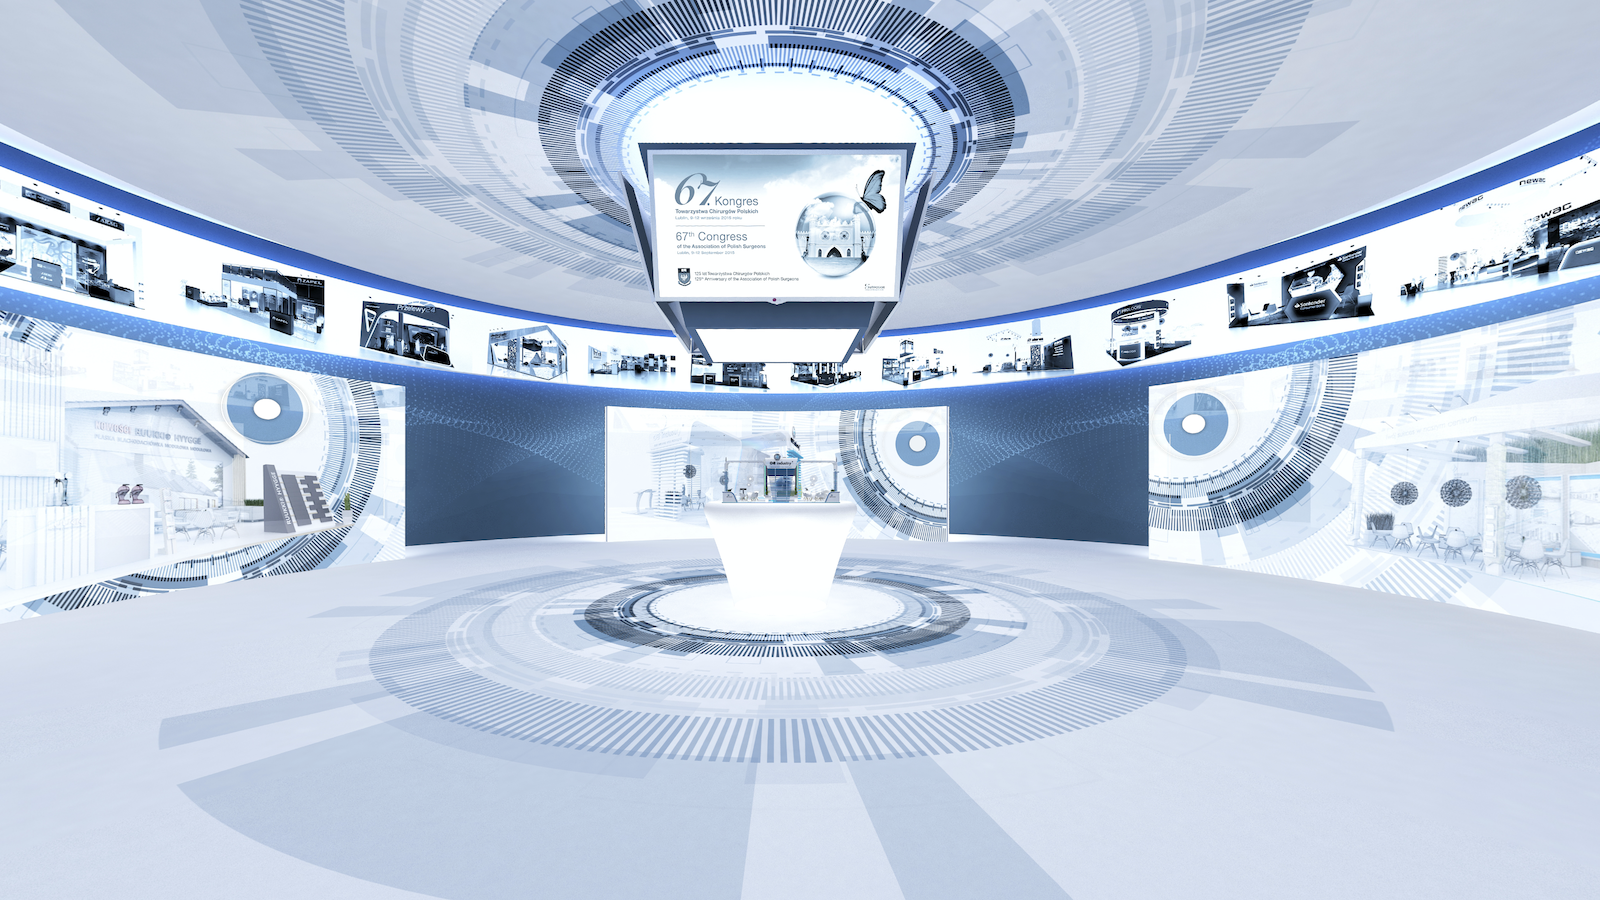 virtual showroom - virtual exhibition space